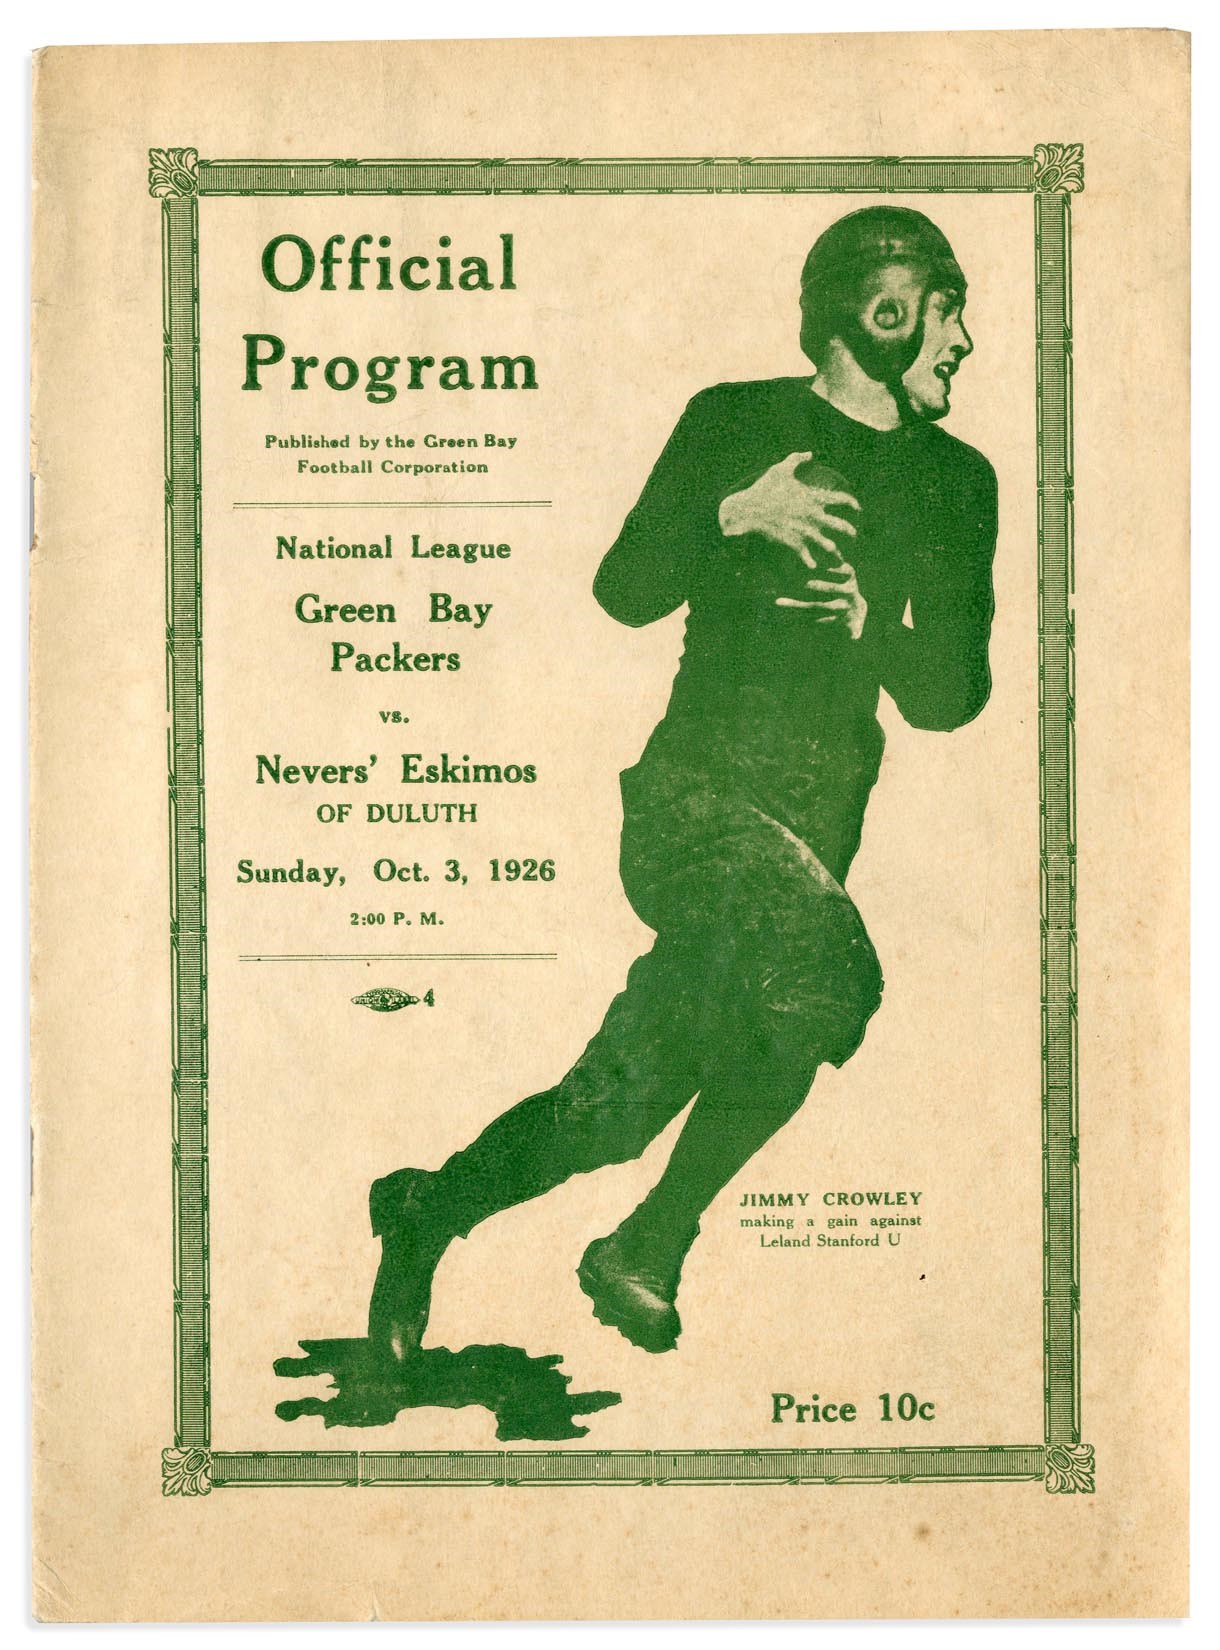 1926 Green Bay Packers vs. Duluth Eskimos 0-0 Tie Game Program